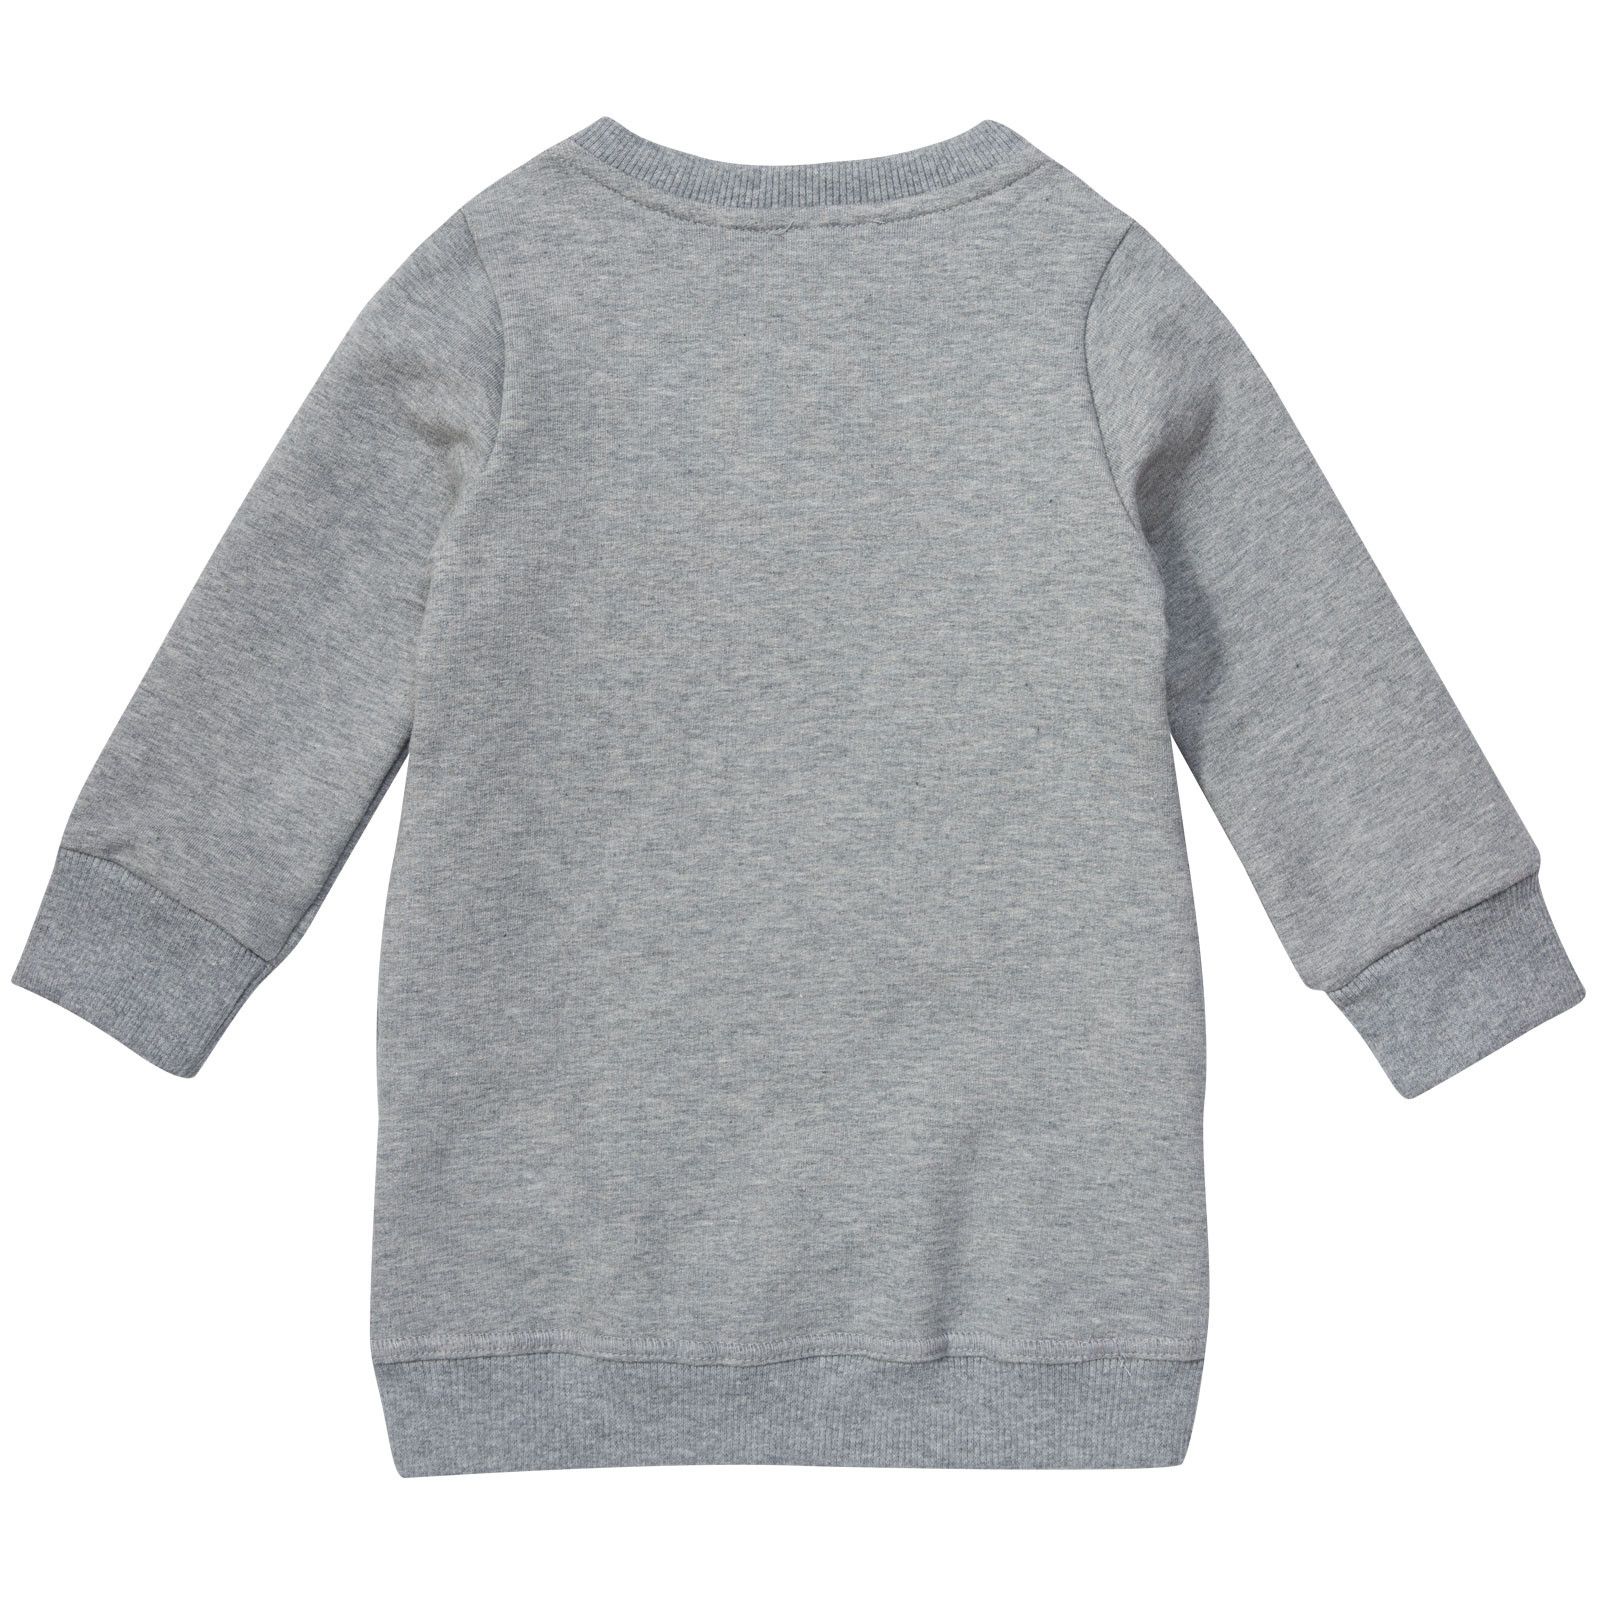 Girls Grey Tiger Embroidered Jersey Sweatshirt Dress - CÉMAROSE | Children's Fashion Store - 2